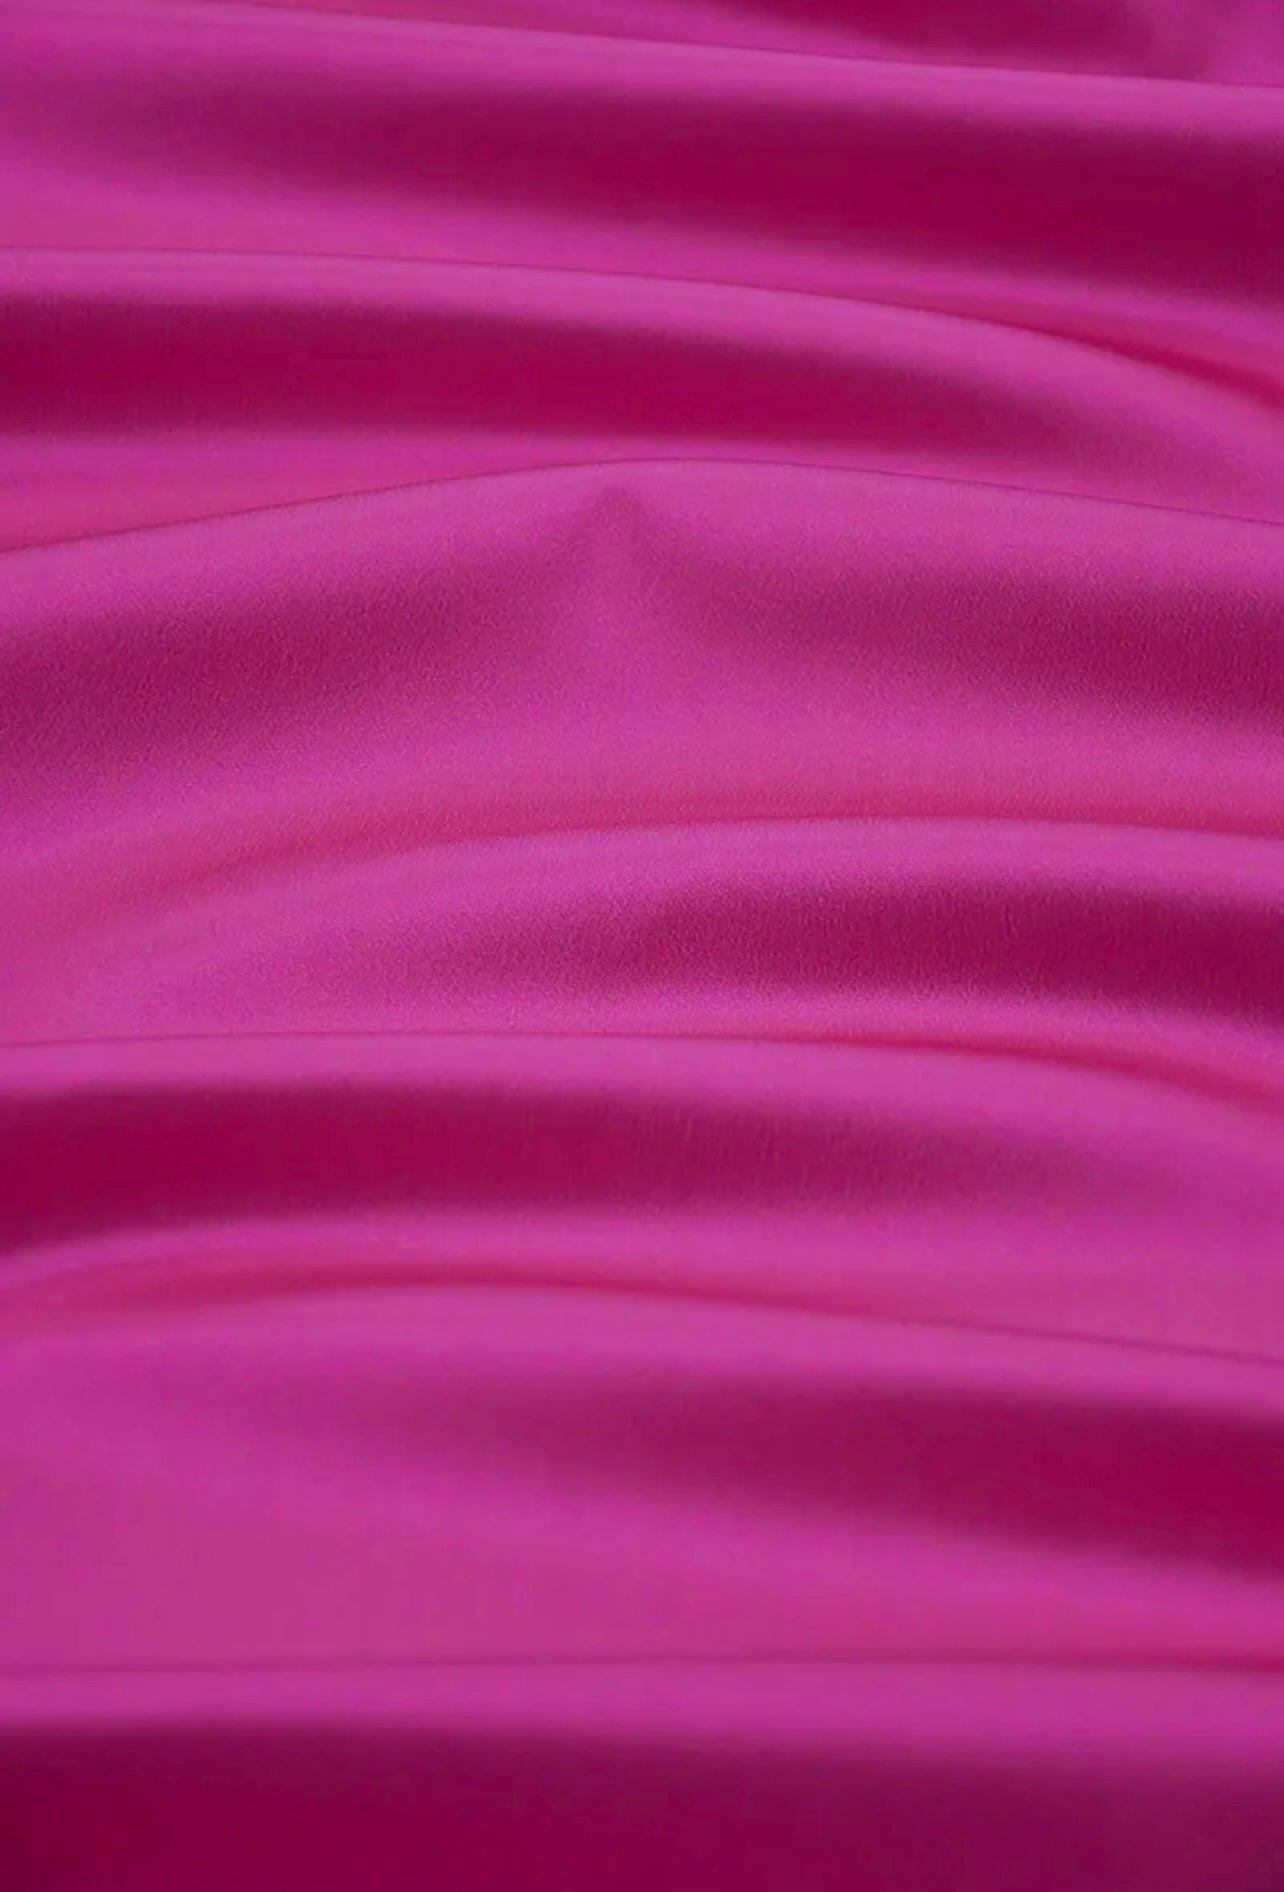 Hot Pink Duchesse Satin Fabric, Hot Pink Bridal Shiny Satin by yard, Fuchsia Heavy Satin Fabric for Wedding Dress, pink satin gown, satin for woman, discounted satin, buy satin online, premium satin, cheap satin, best quality satin, luxury satin